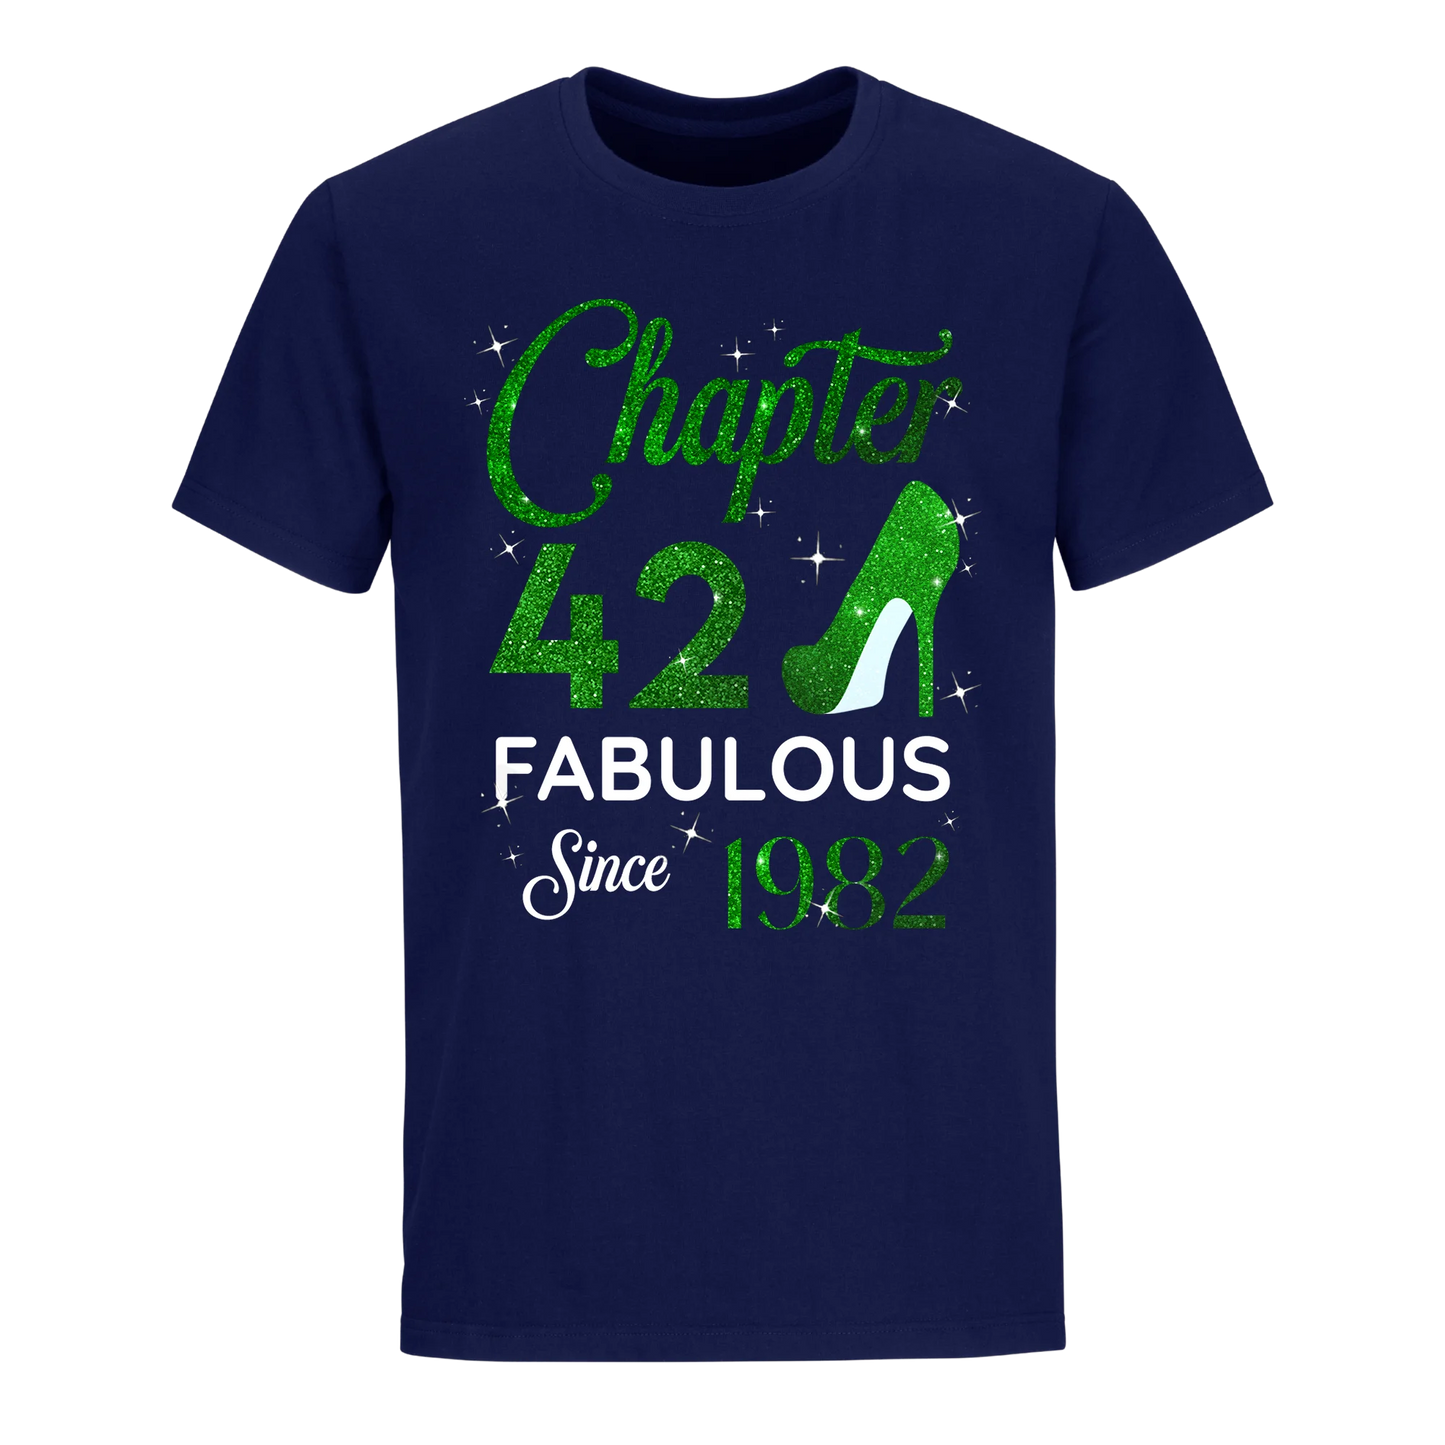 CHAPTER 42ND FABULOUS SINCE 1982 GREEN UNISEX SHIRT